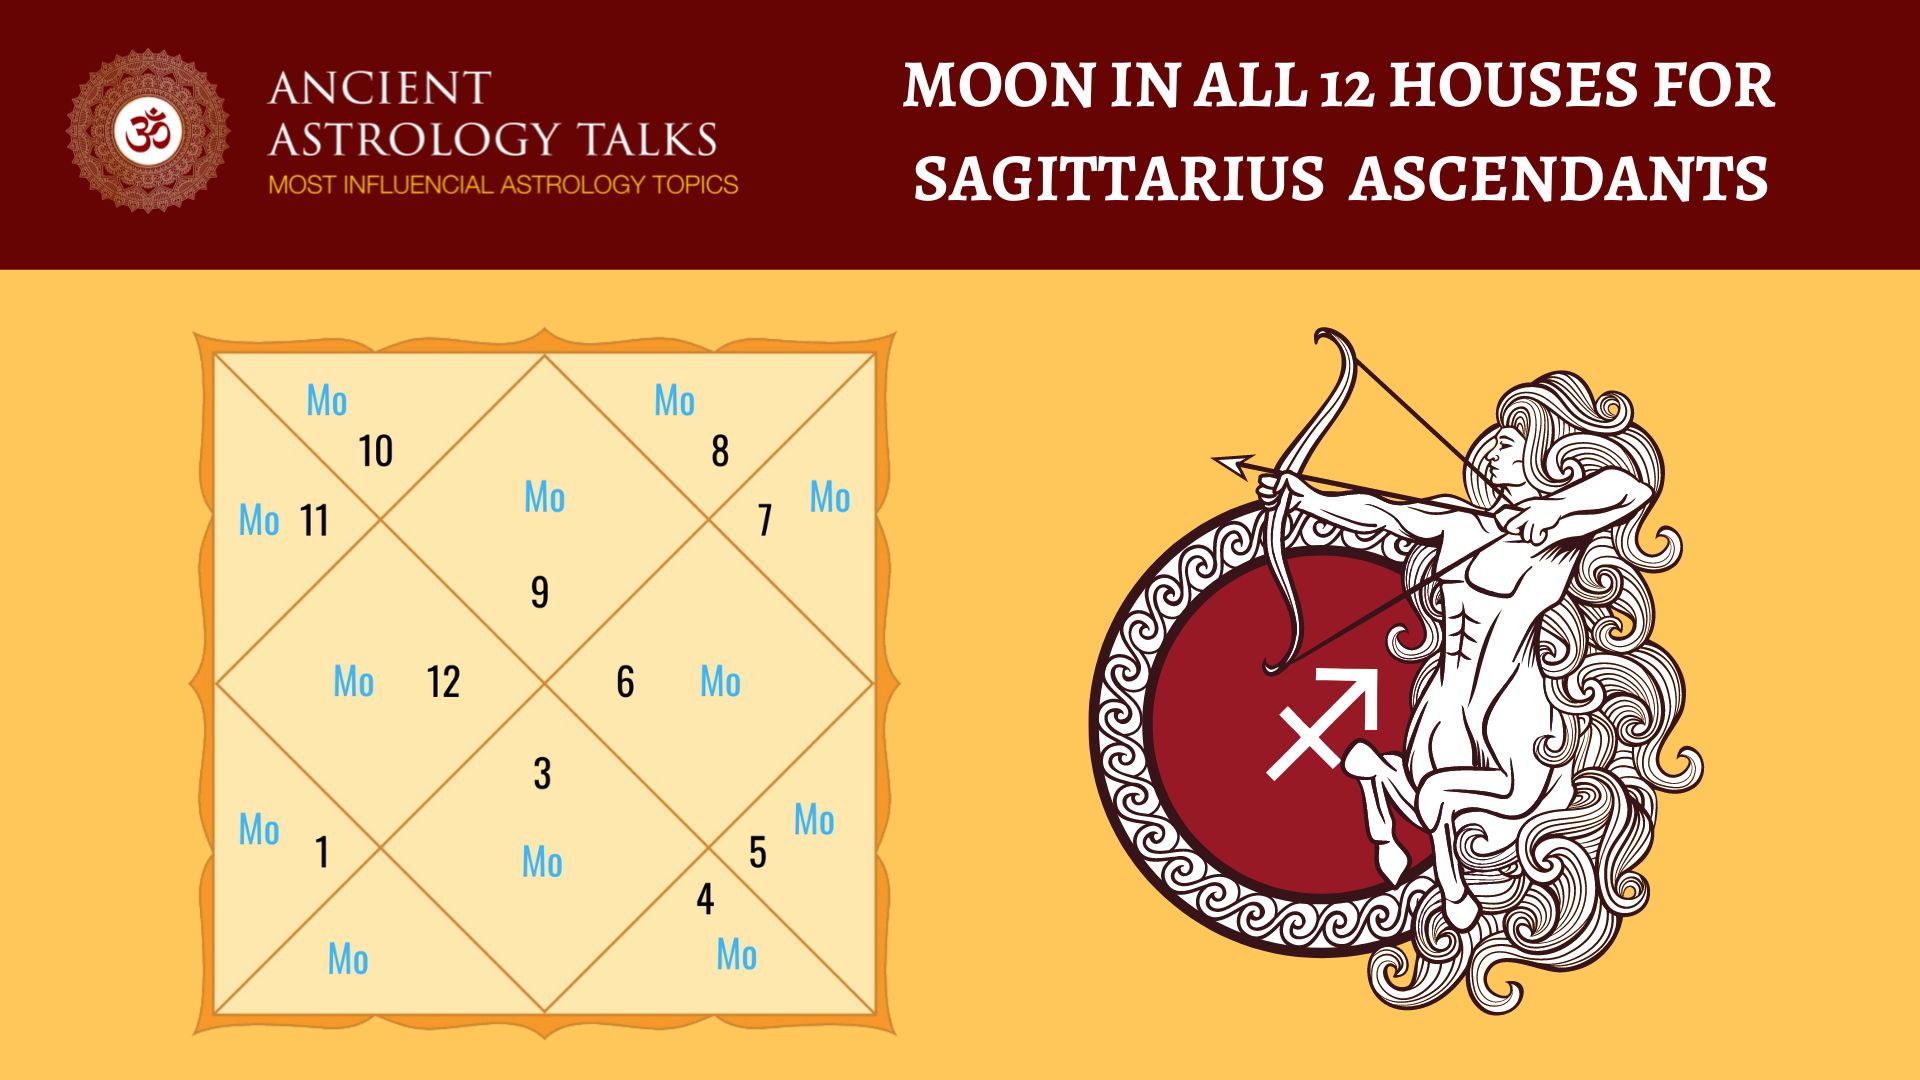 Moon in all 12 houses for Sagittarius Asecendants